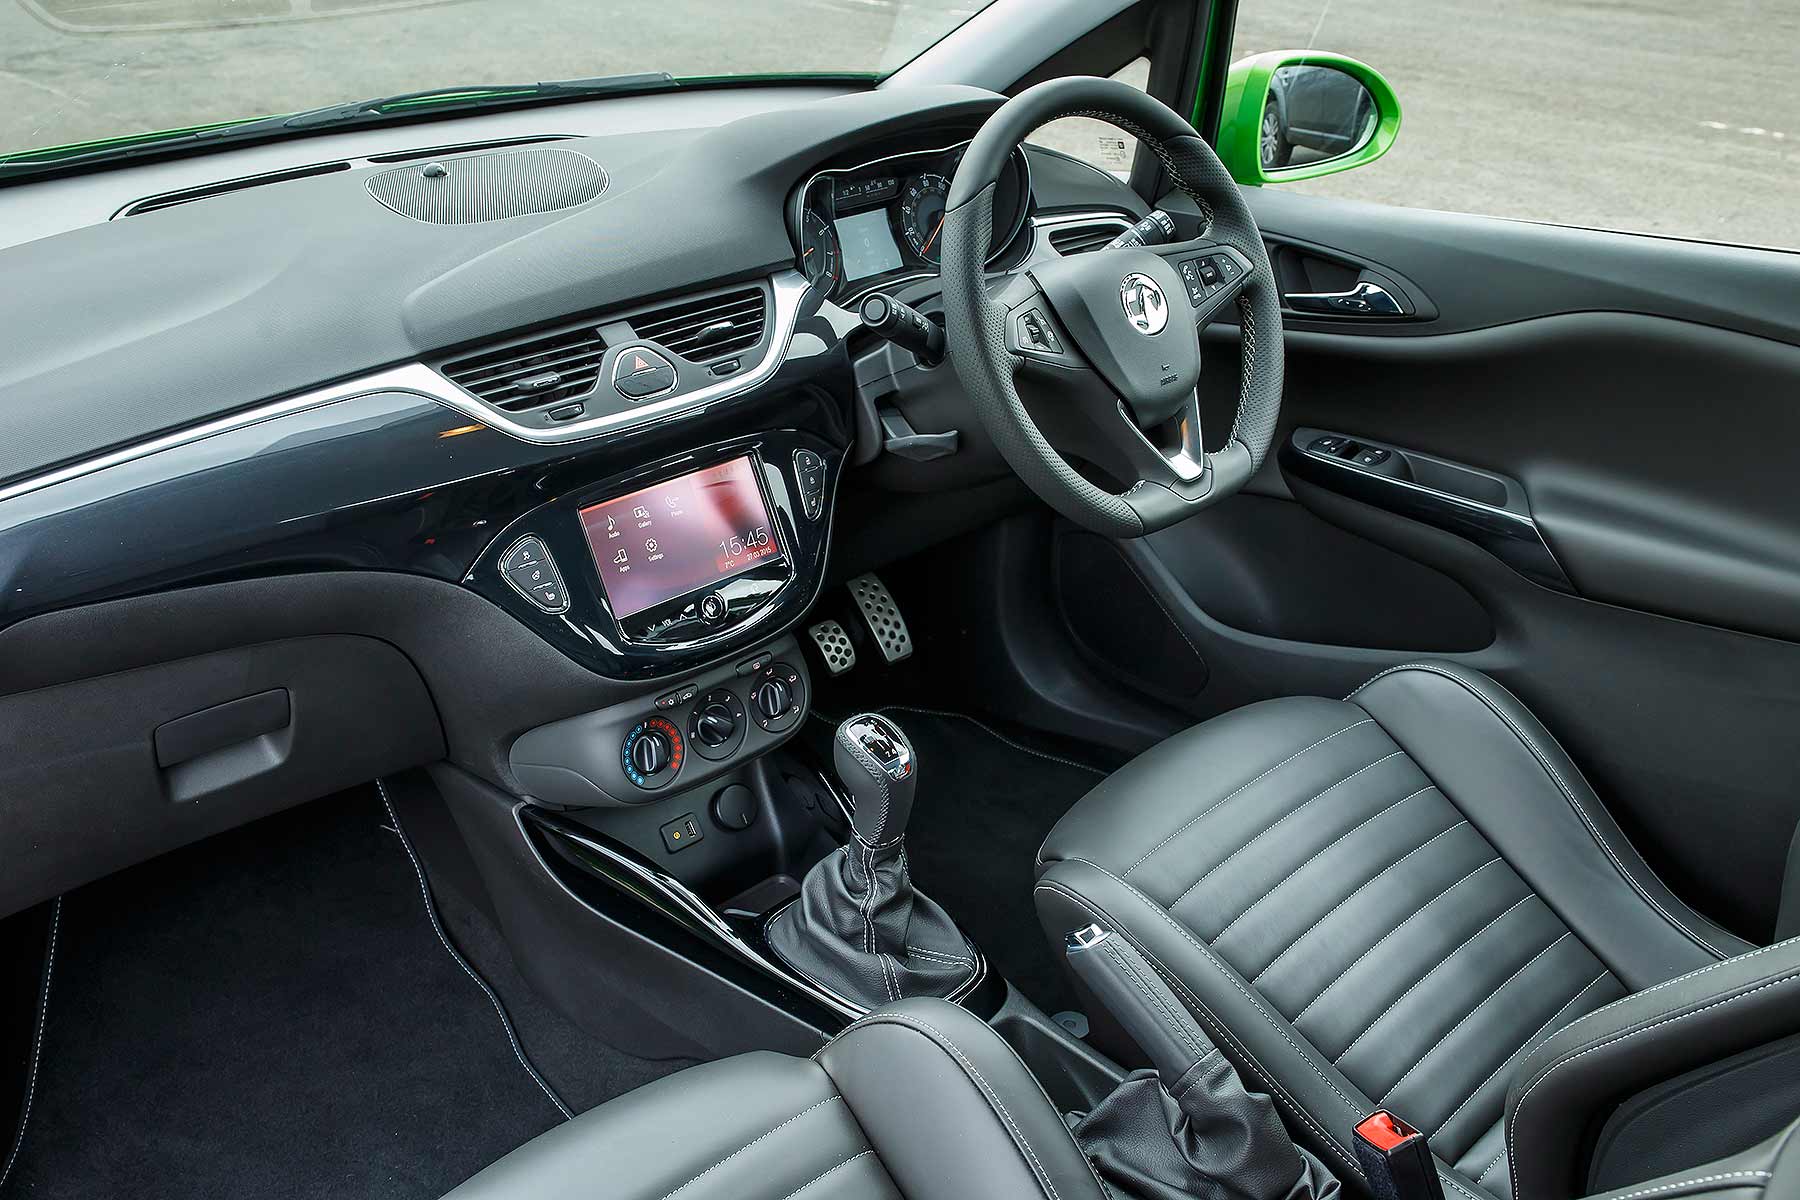 Vauxhall Corsa VXR 2015 review